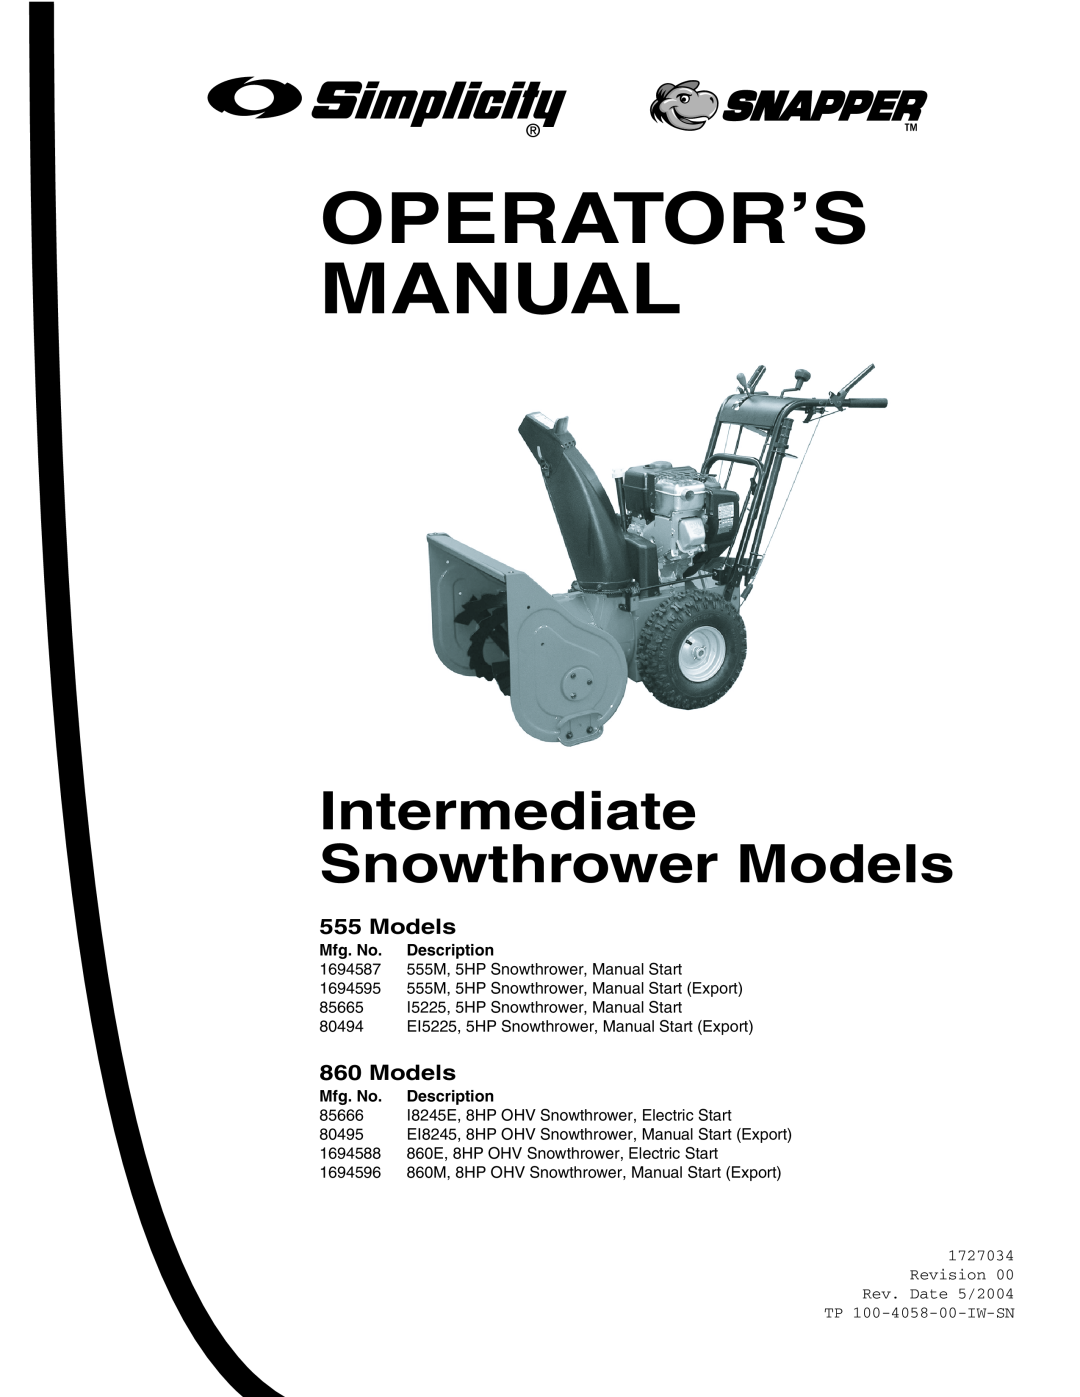 Snapper 555M, 555M, 15225, E15225, 18245E, E18245, 860E, 860M manual Operator’S Manual, Intermediate Snowthrower Models 